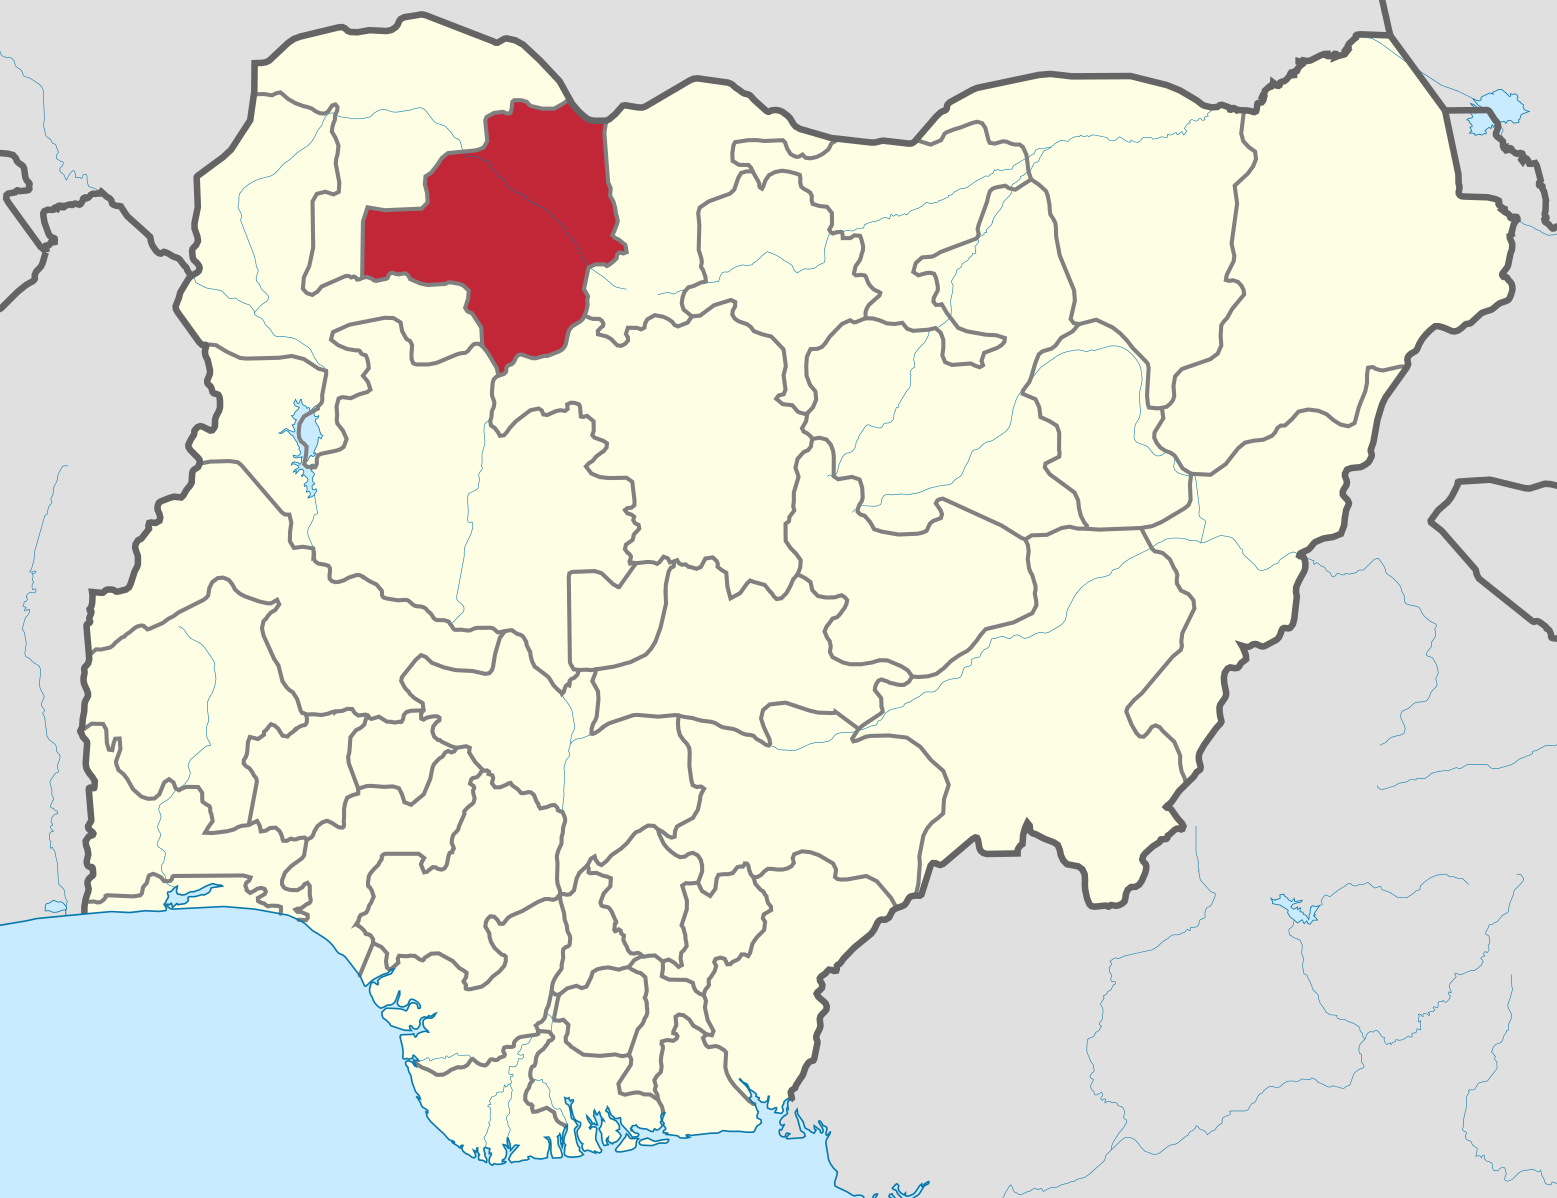 Nigeria - Zamfara.svZamfara state in northwest Nigeria, where almost 300 school girls were kidnapped by an armed group two weeks ago (Credit: Profoss, CC SA-BY 3.0)